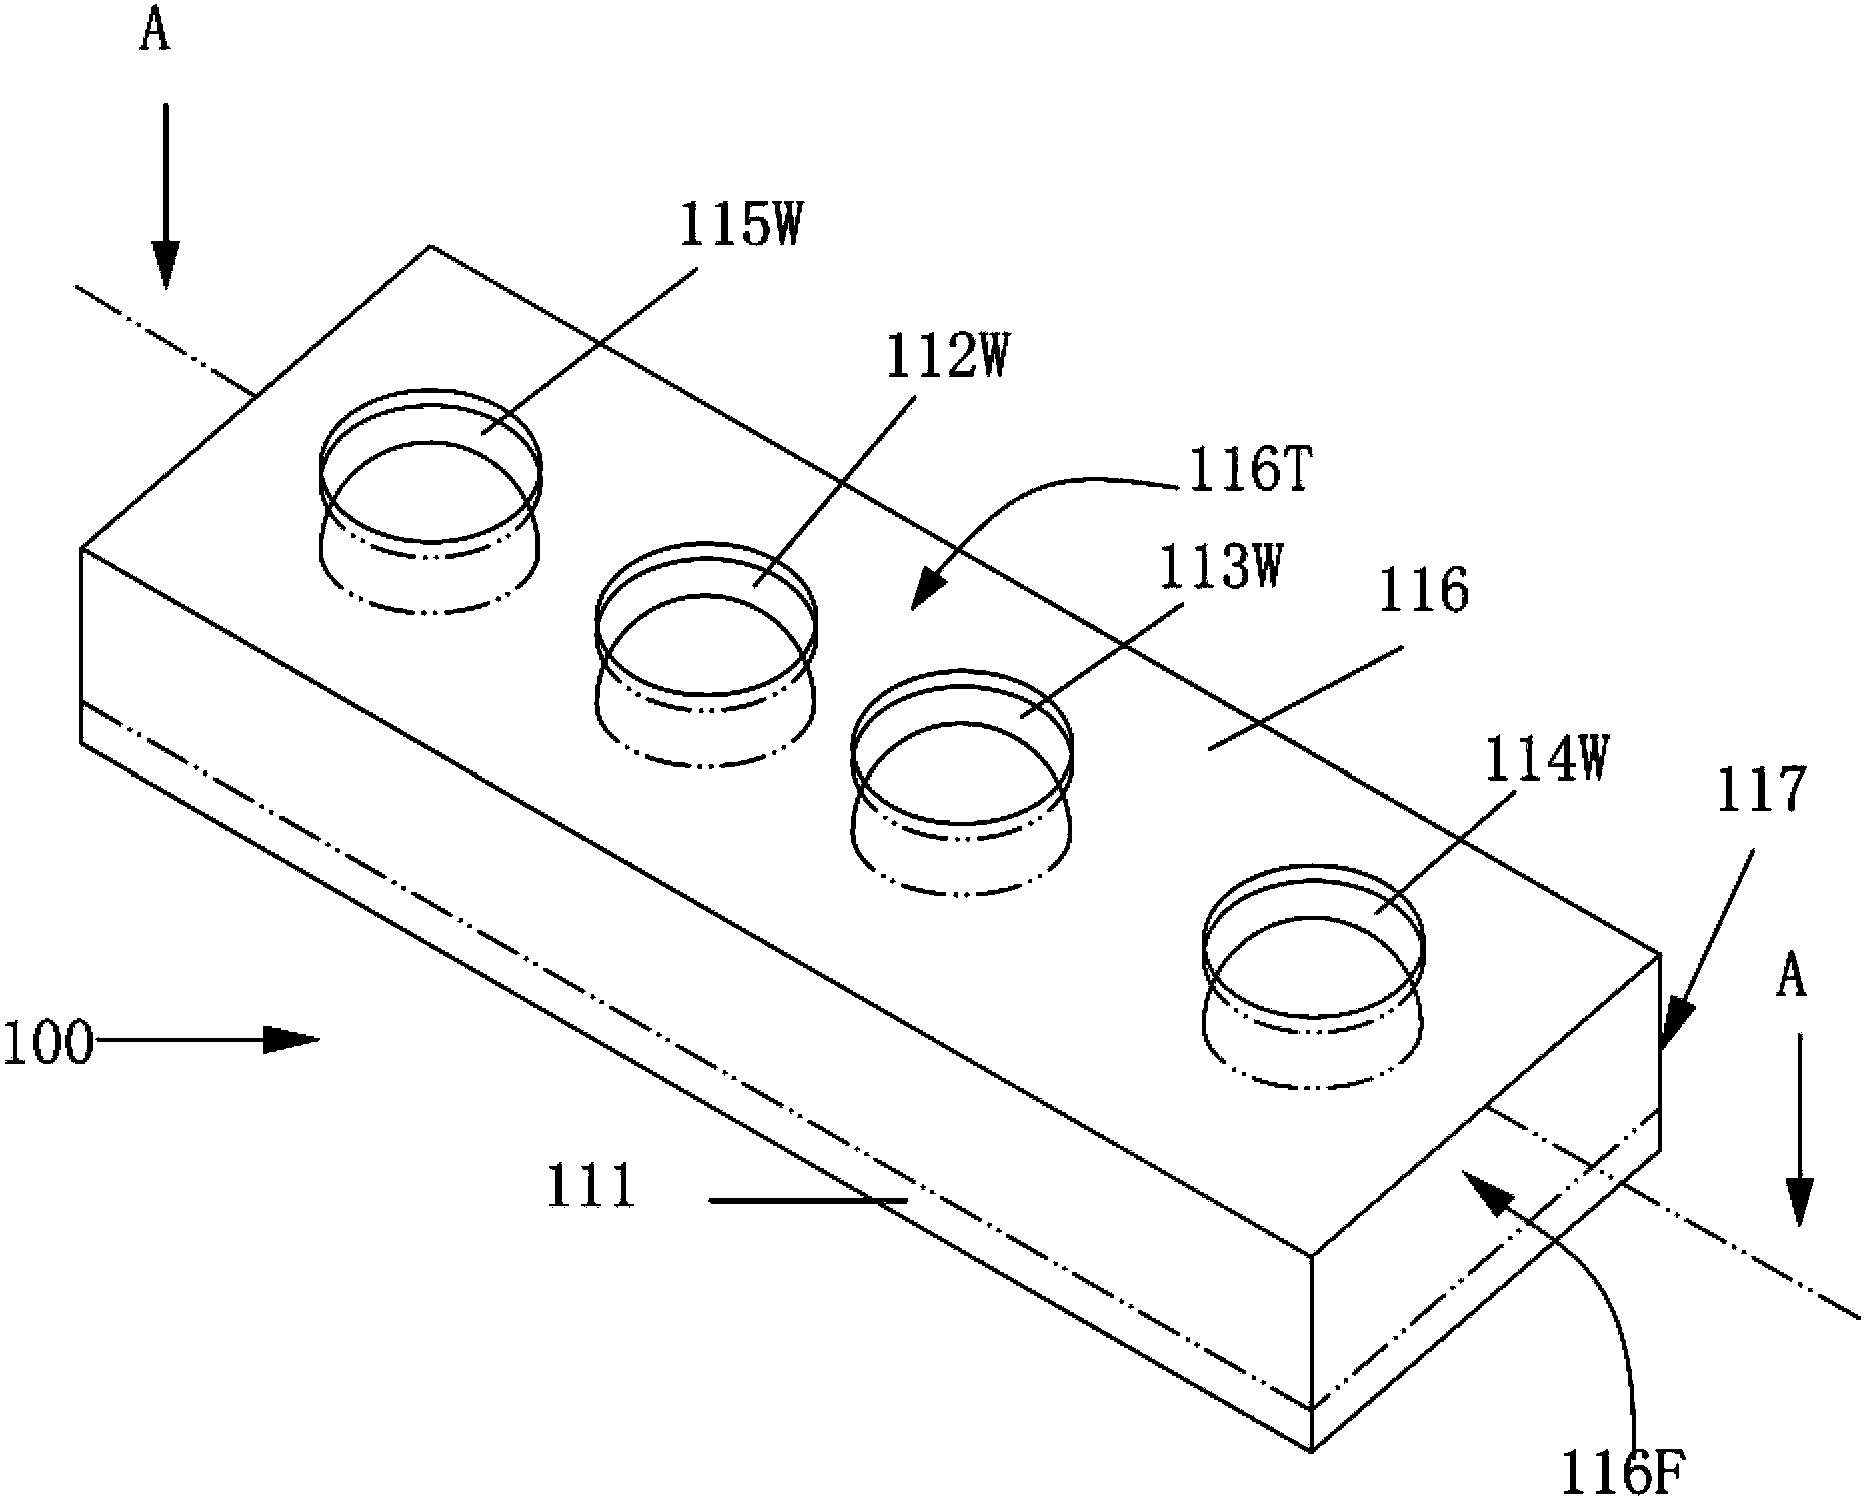 Integrated optical sensor package